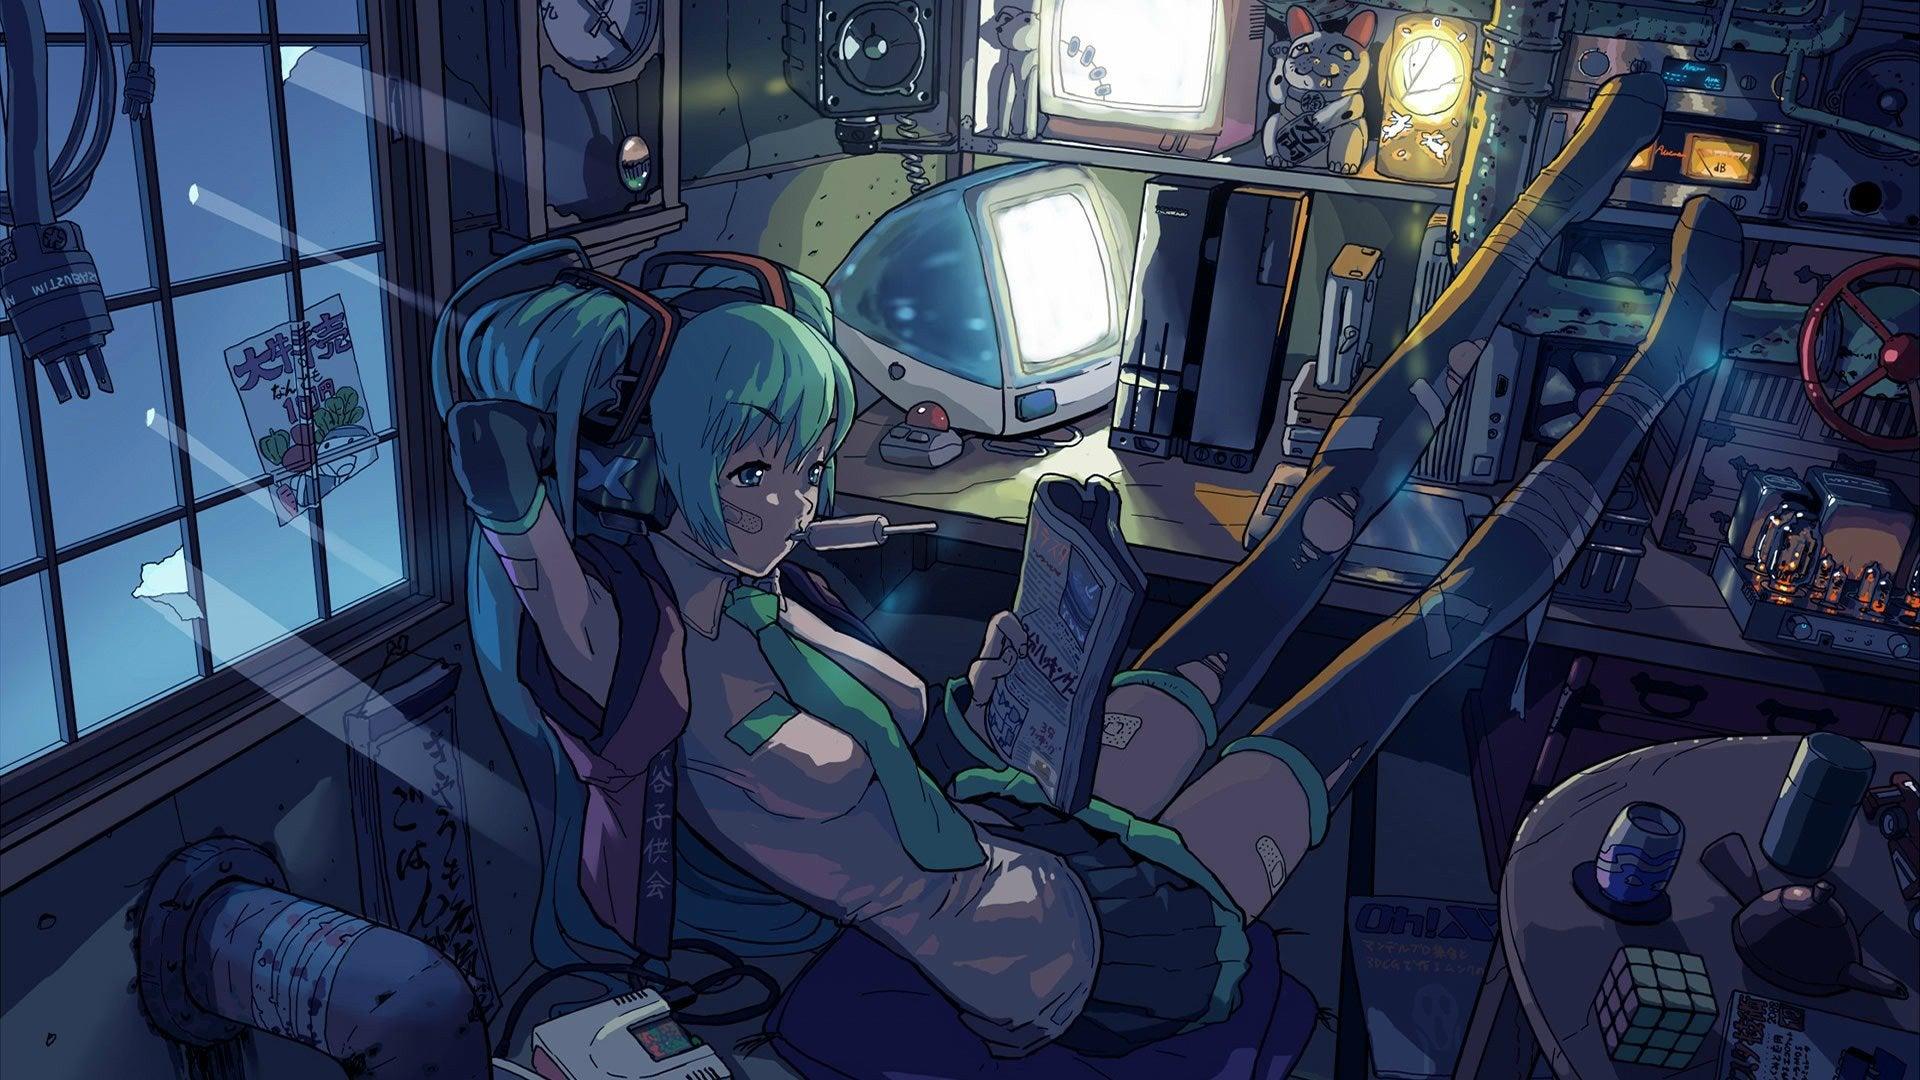 Anime girl relaxing in her own world [1920x1080]